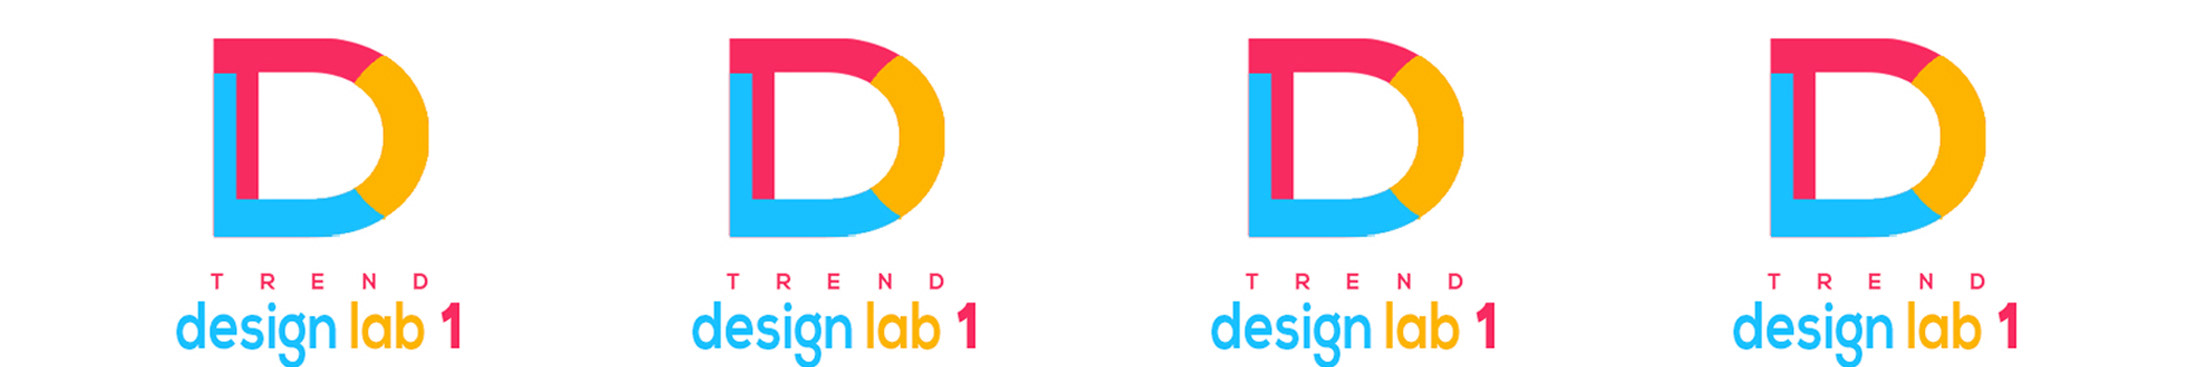 Banner de perfil de Trend Design Lab 1